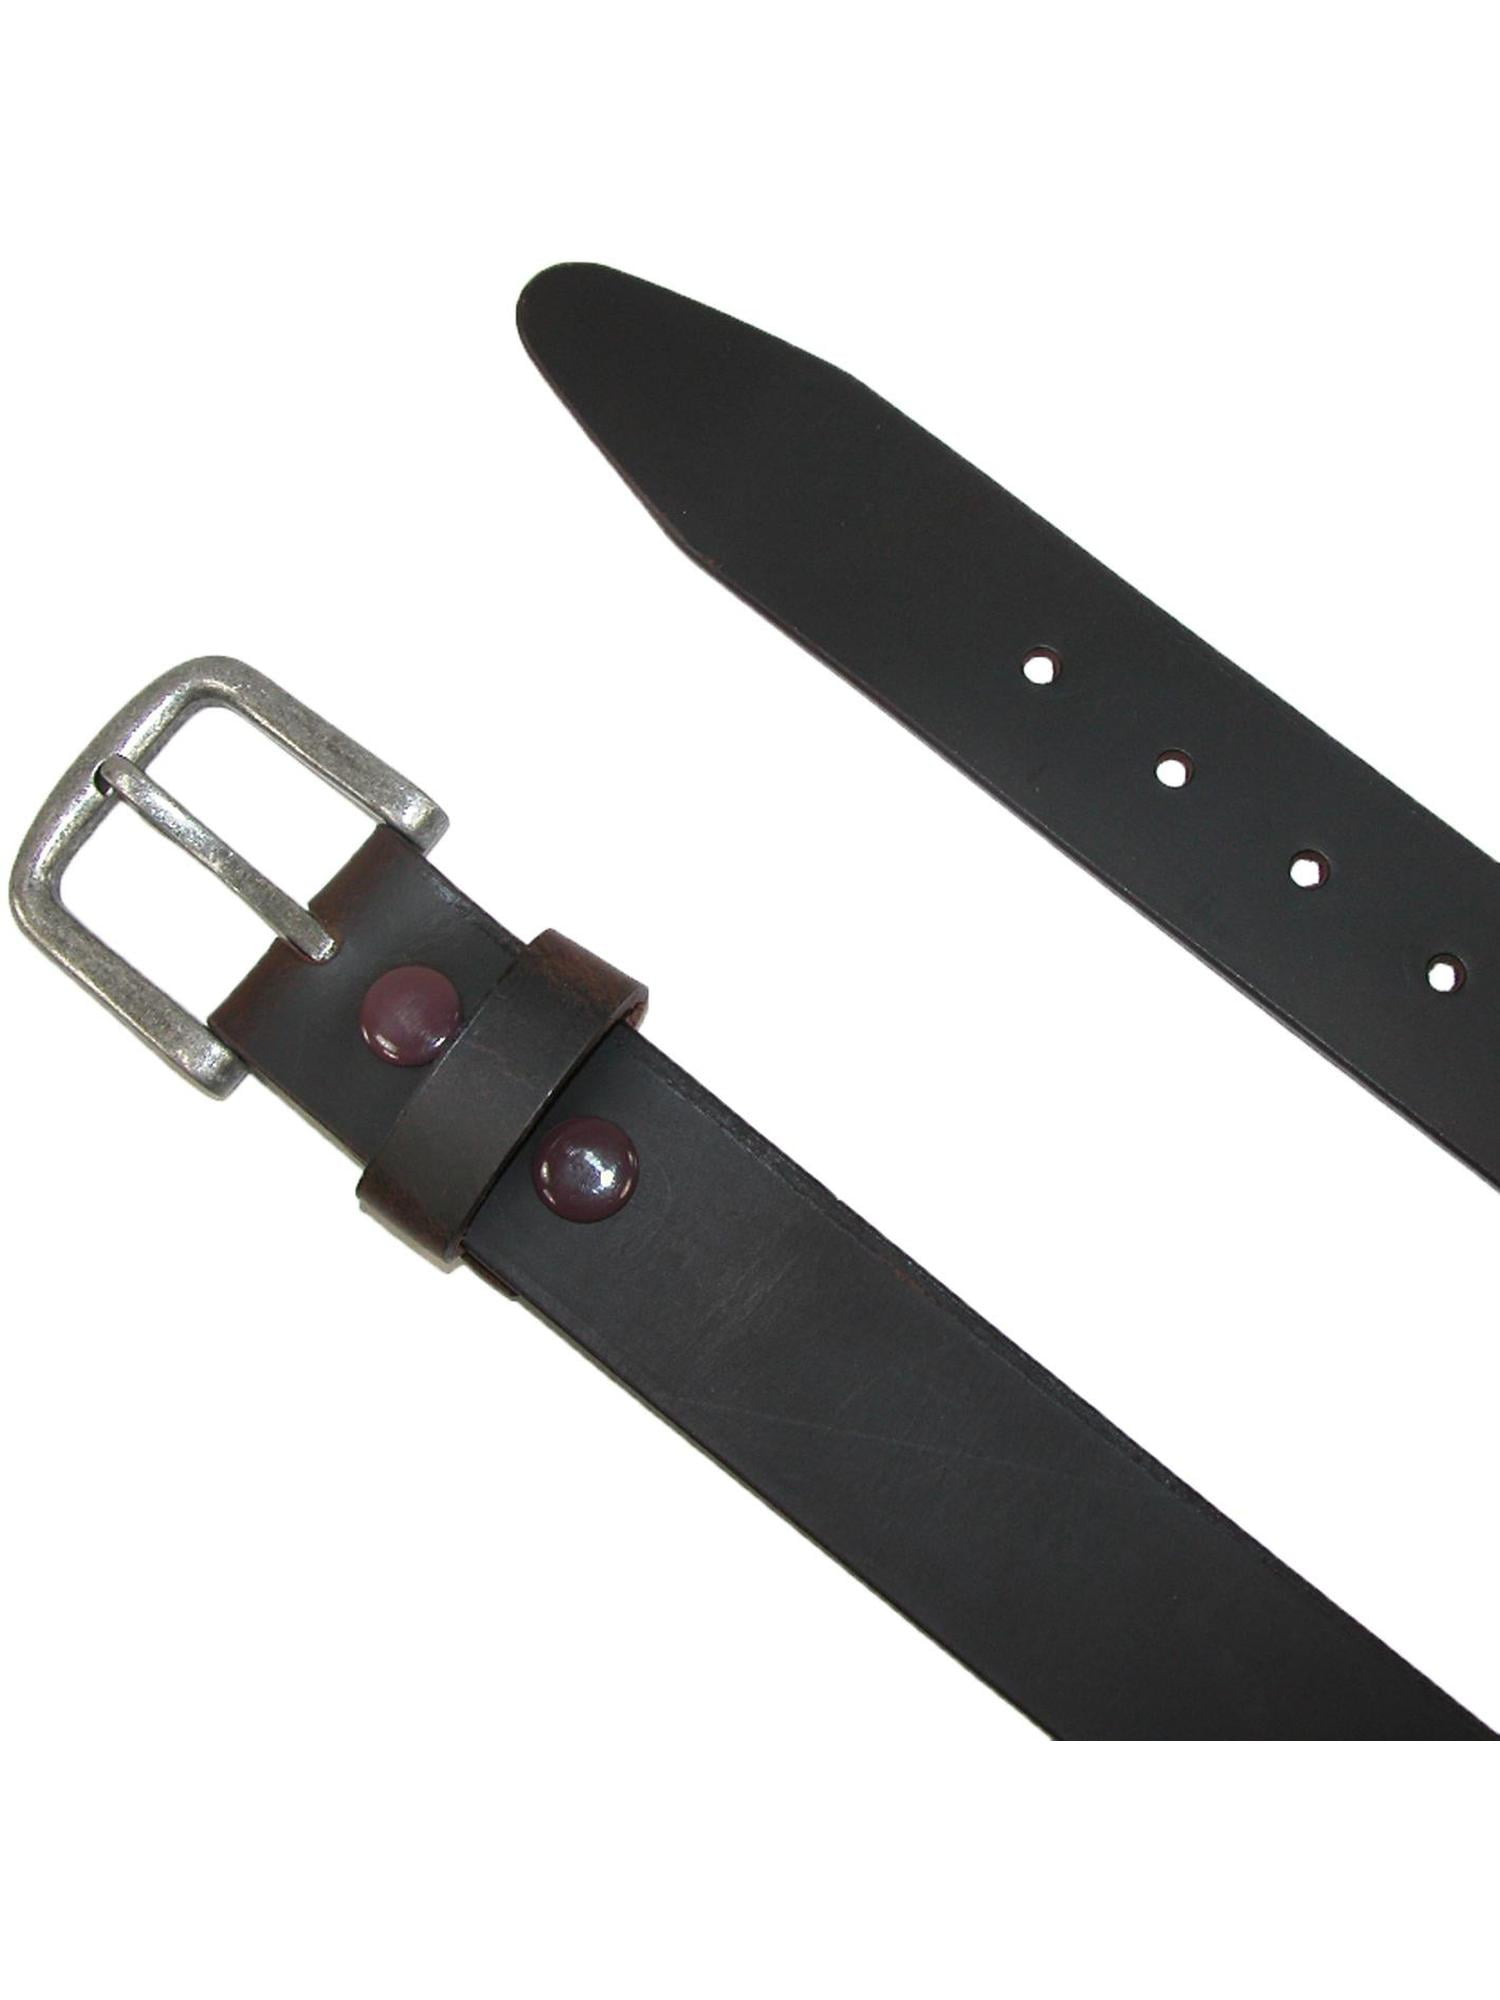 TOUGERJOY Men's Belt Big & Tall 56-80 Genuine Leather Belt Reinforced Strap Casual Work Jean Extra Long Belts